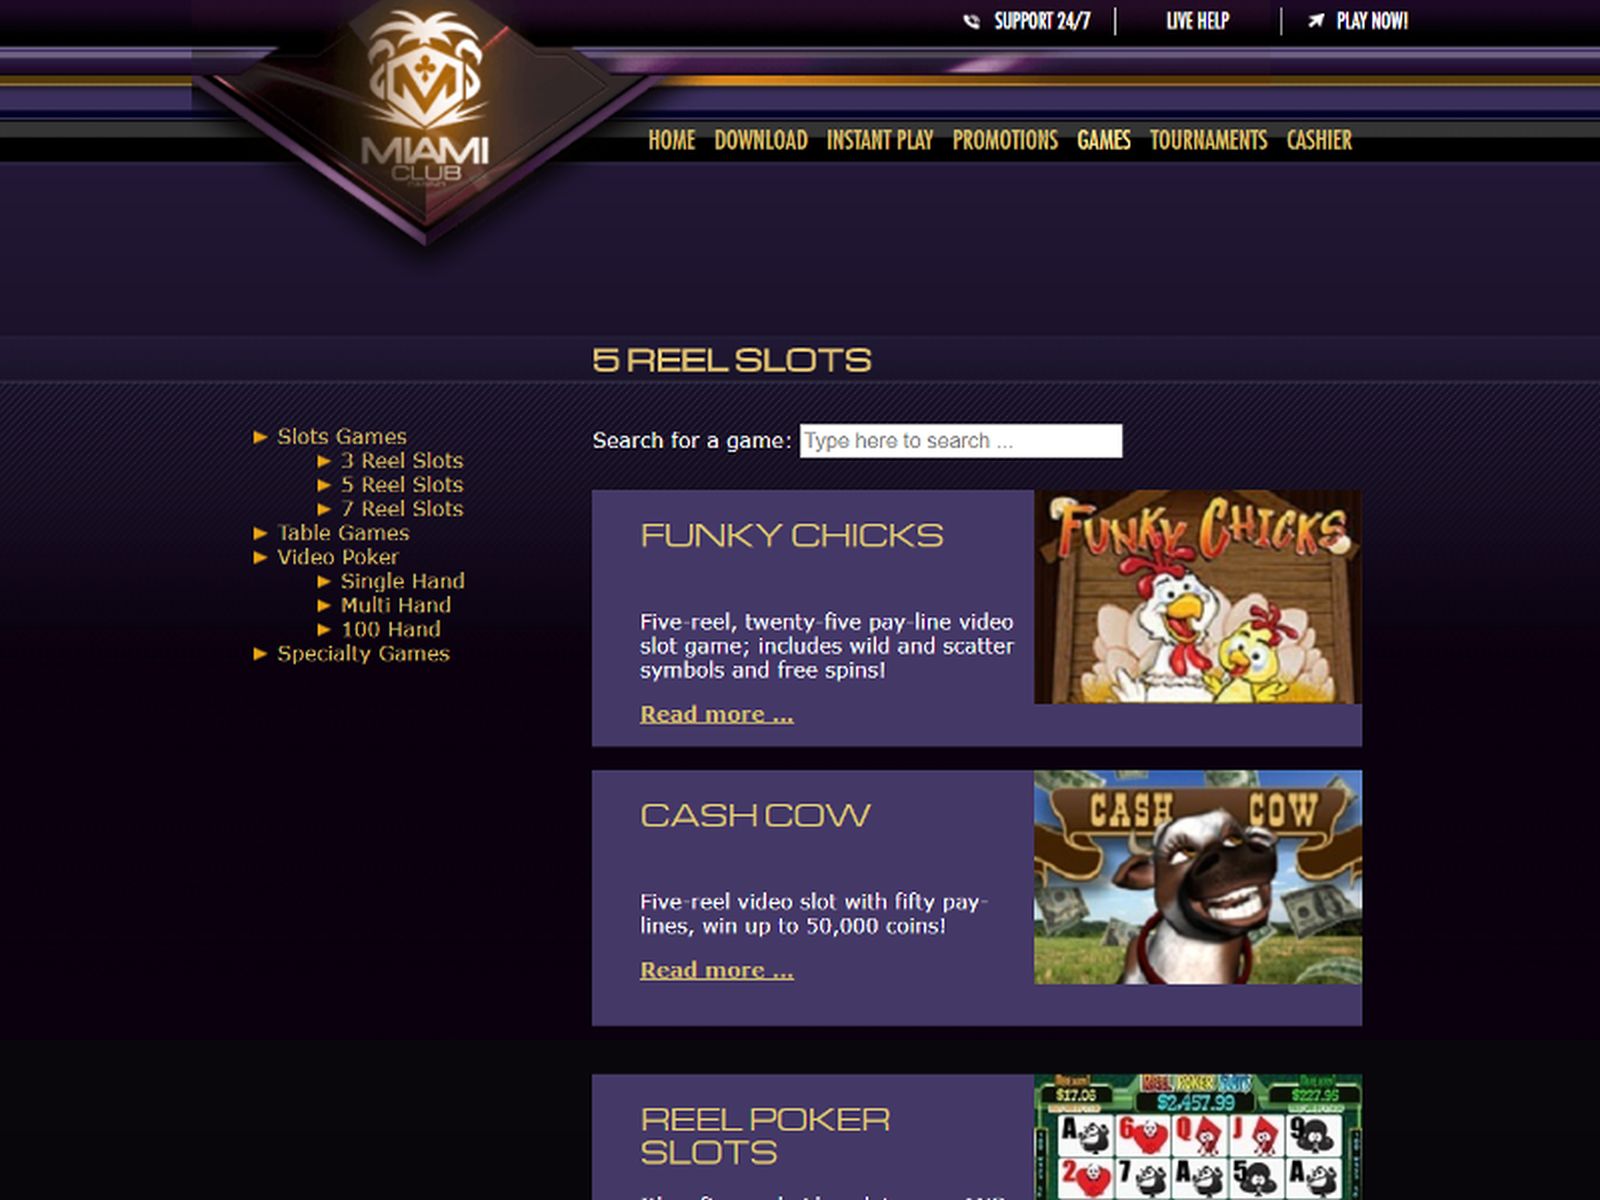 Miami Club Casino Online Casino